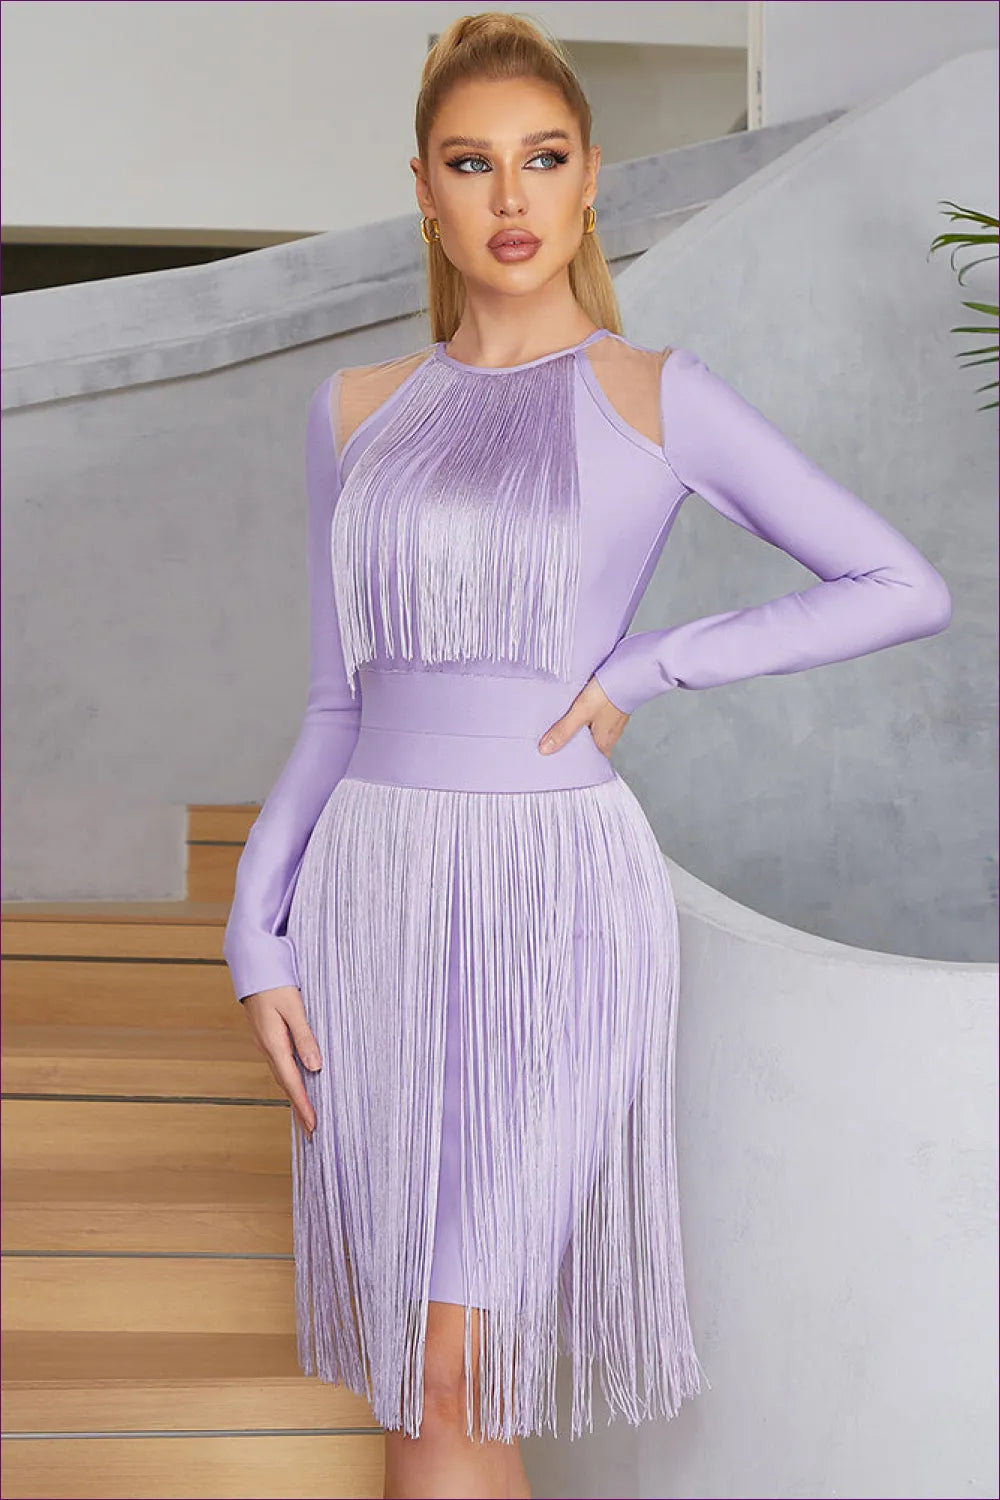 Lavender Fringe Cocktail Dress - Party Ready